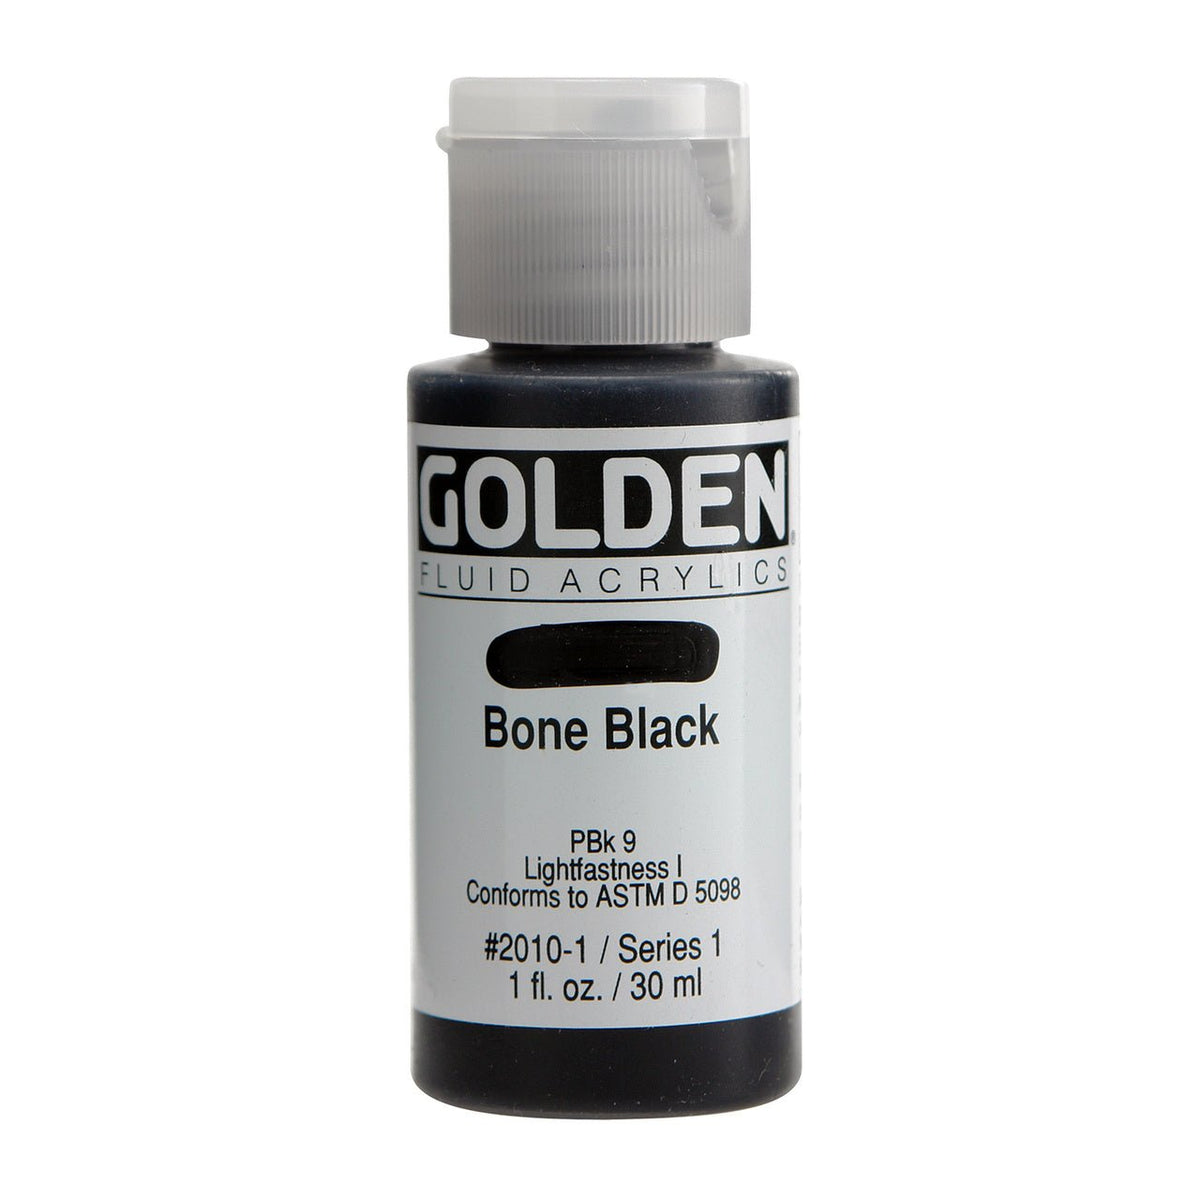 Golden Fluid Acrylic Bone Black 1 oz - merriartist.com